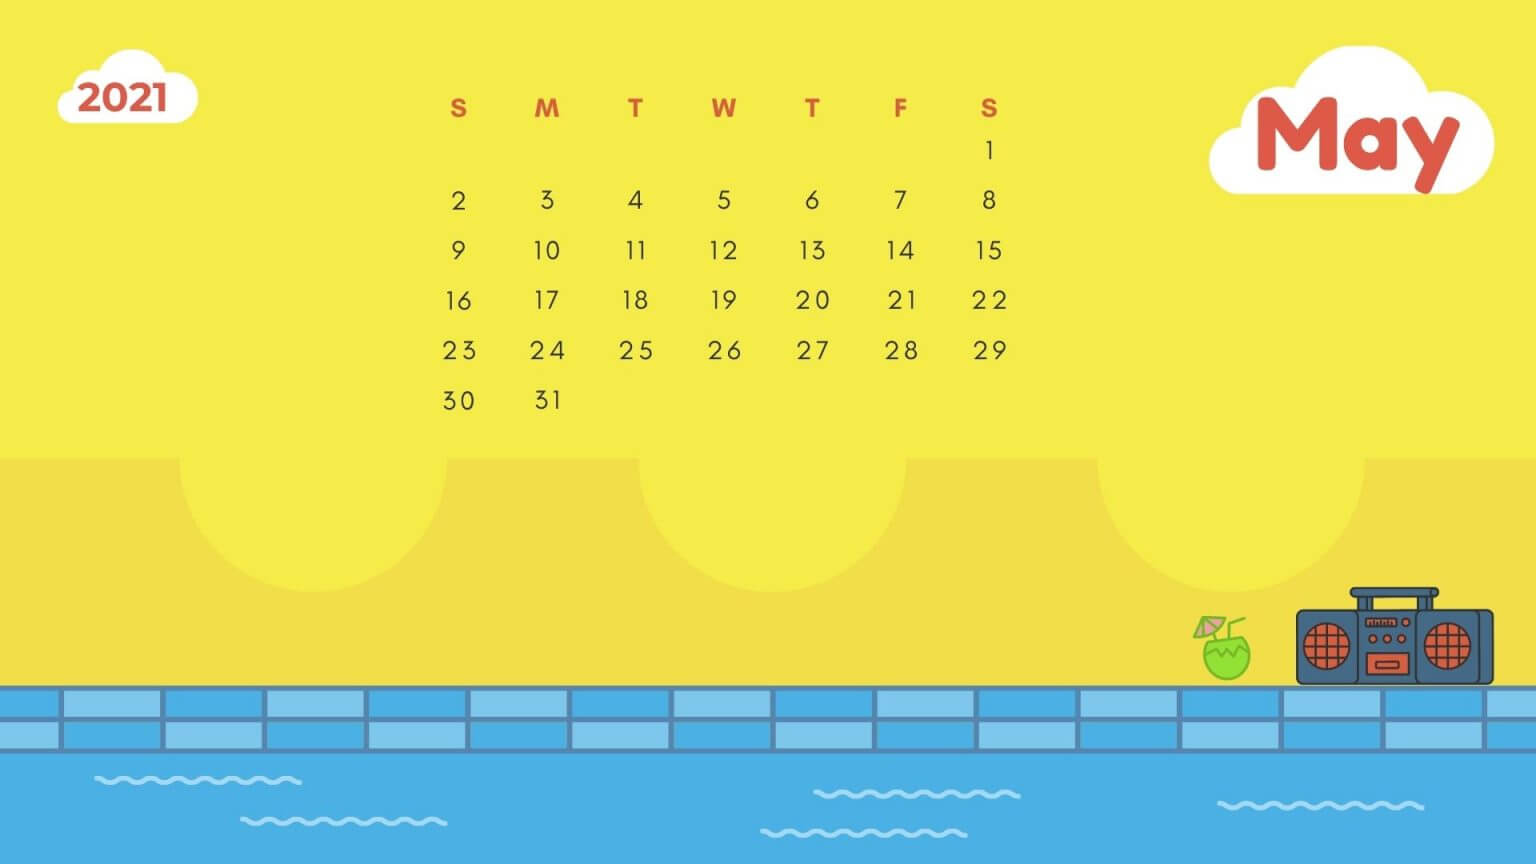 May 2021 Calendar Wallpaper for Laptop